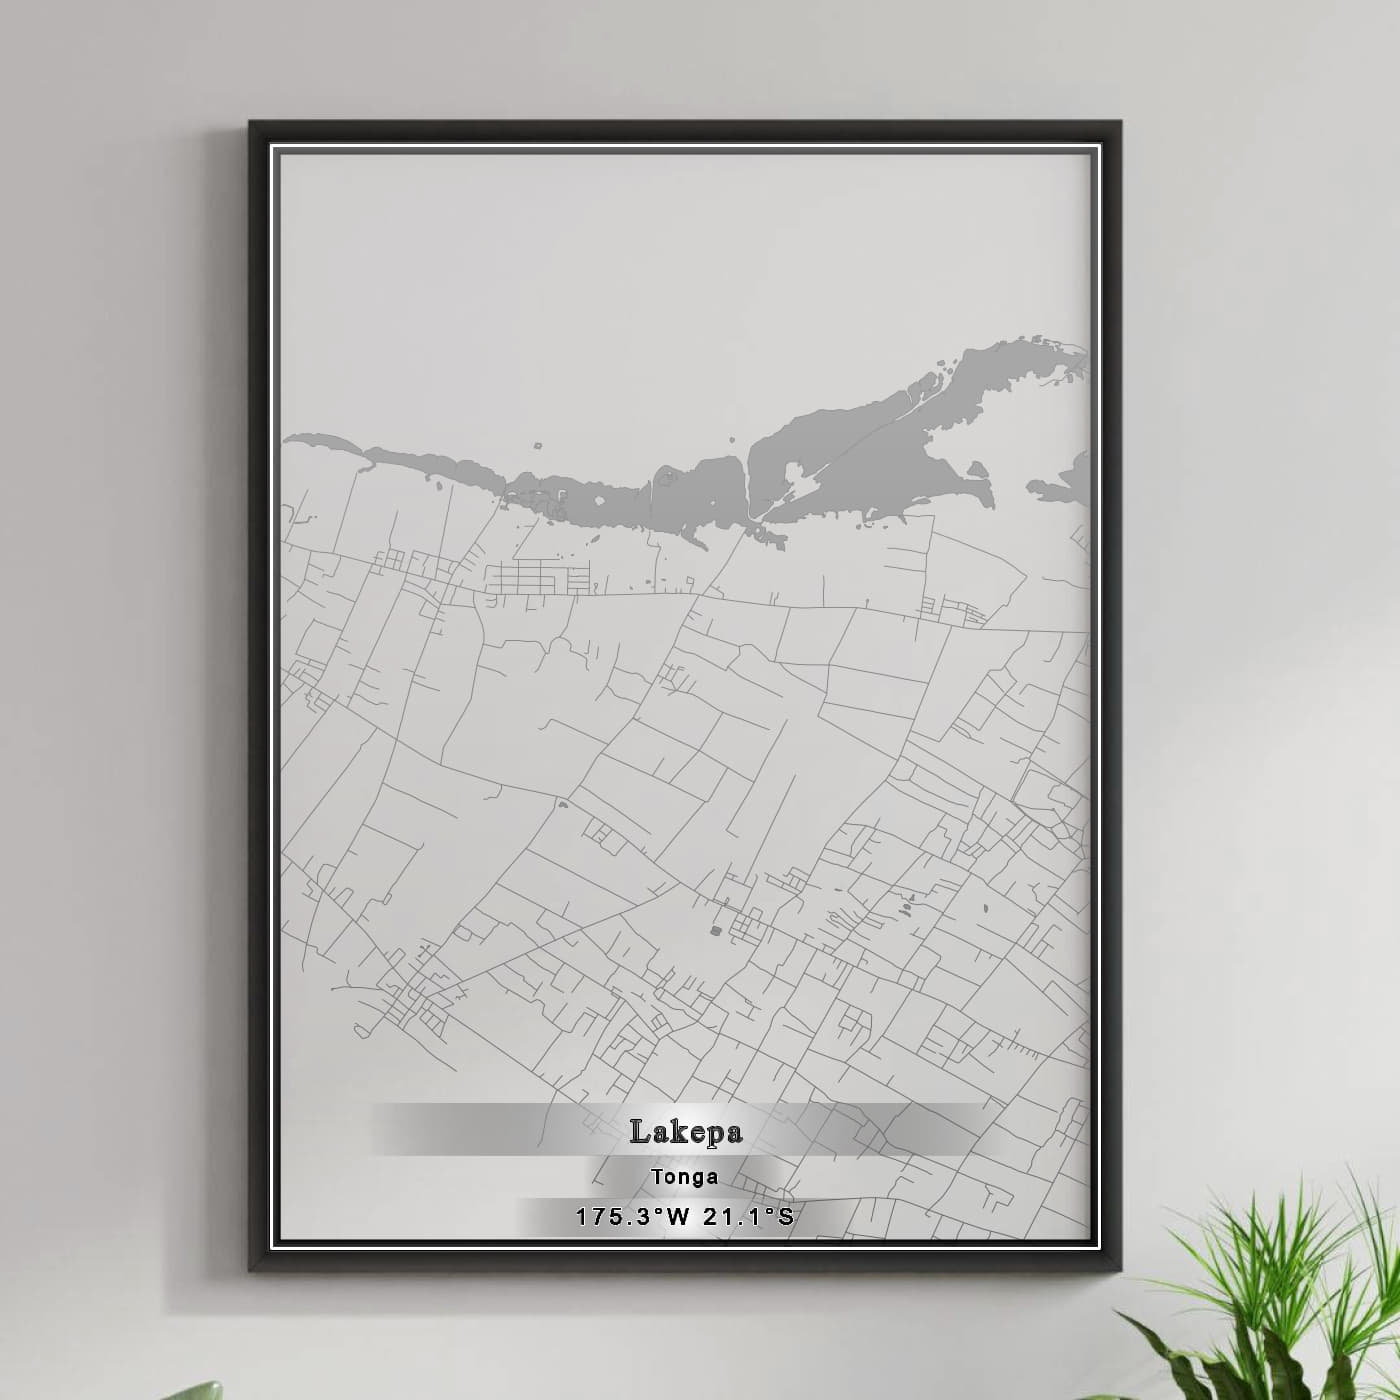 ROAD MAP OF LAKEPA, TONGA BY MAPBAKES